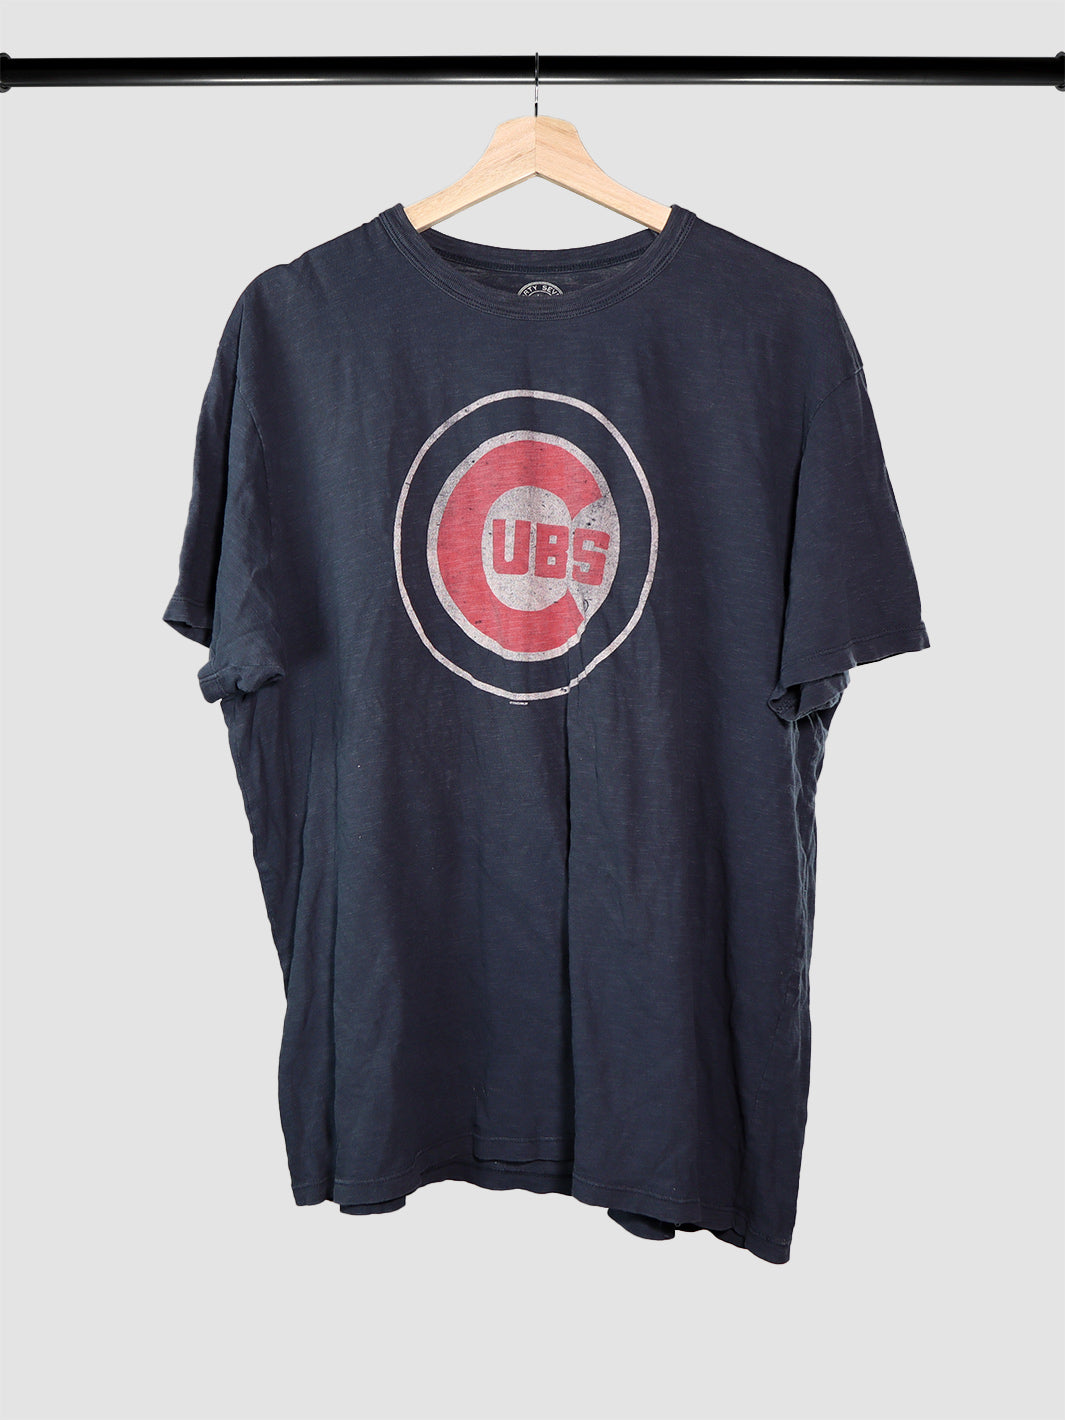 Vintage Sports T-Shirts – Pretty Old